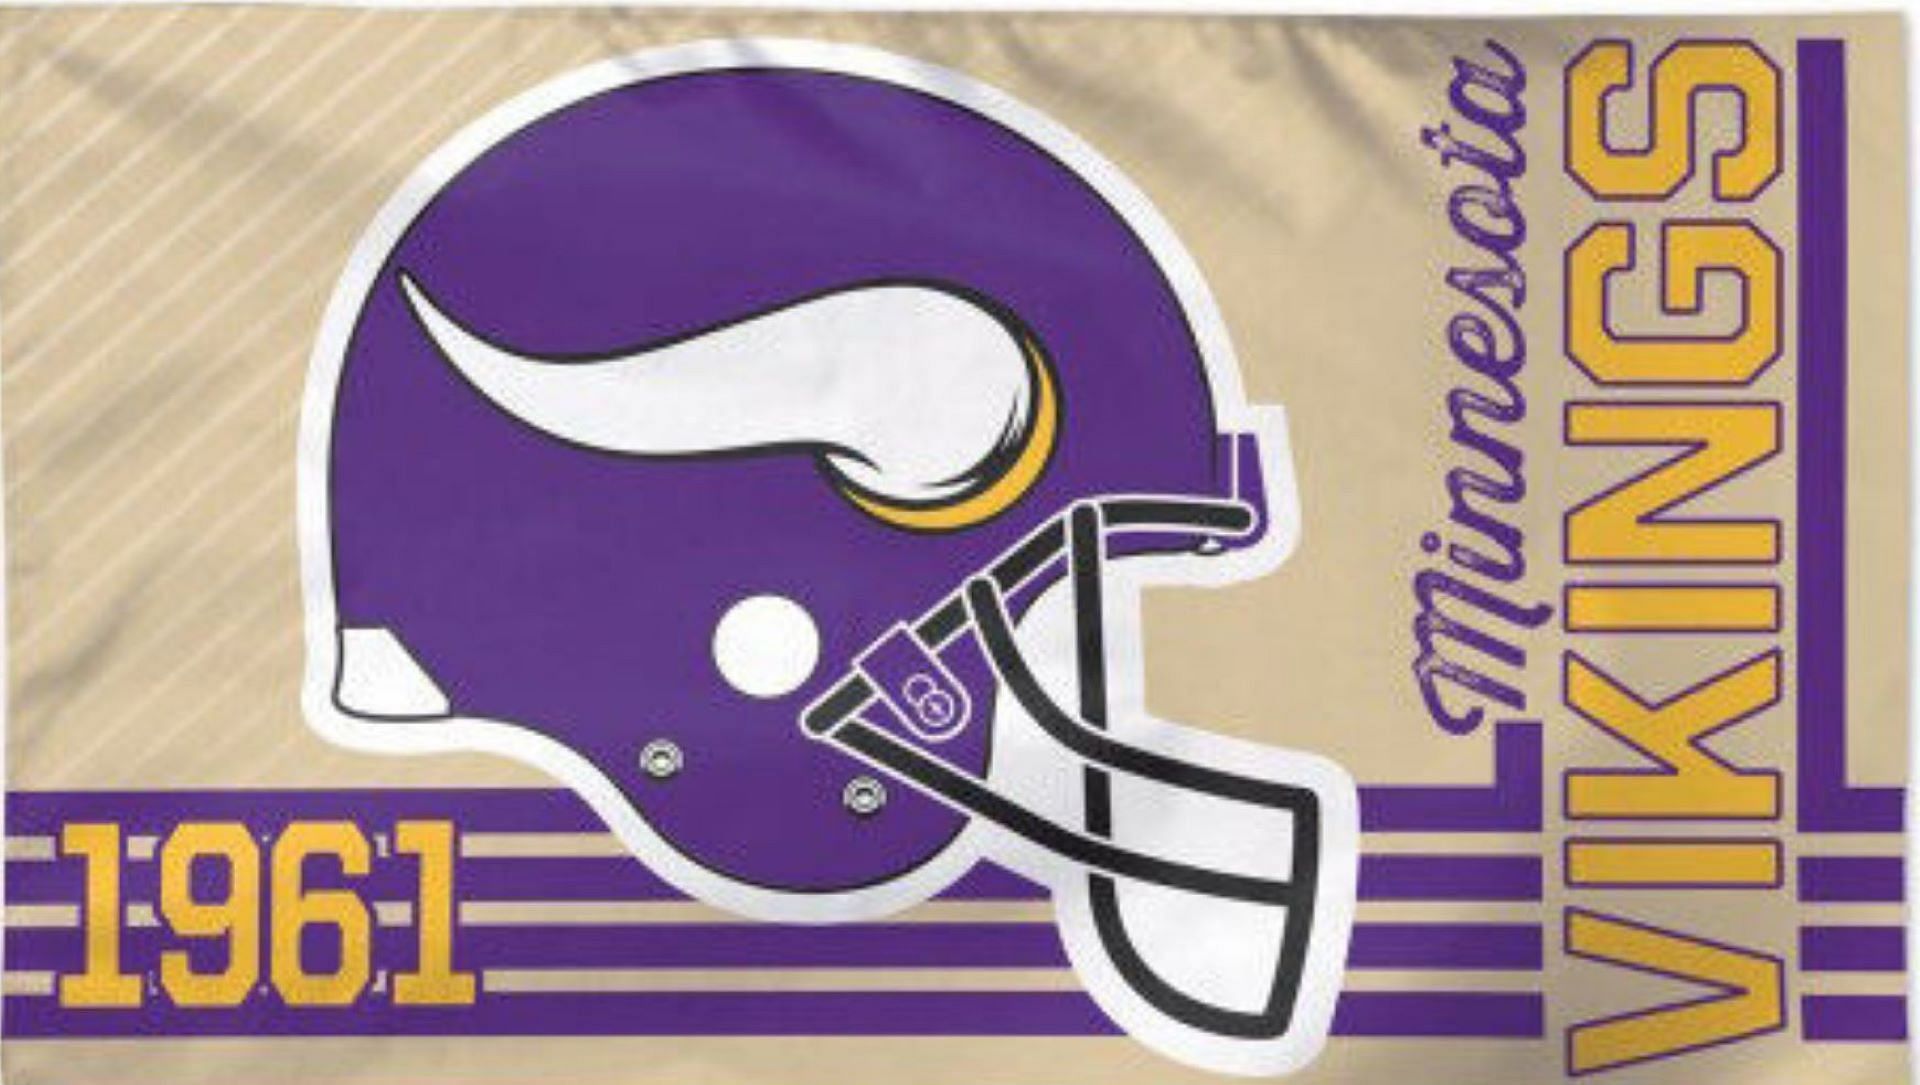 1961 NFL Minnesota Vikings logo